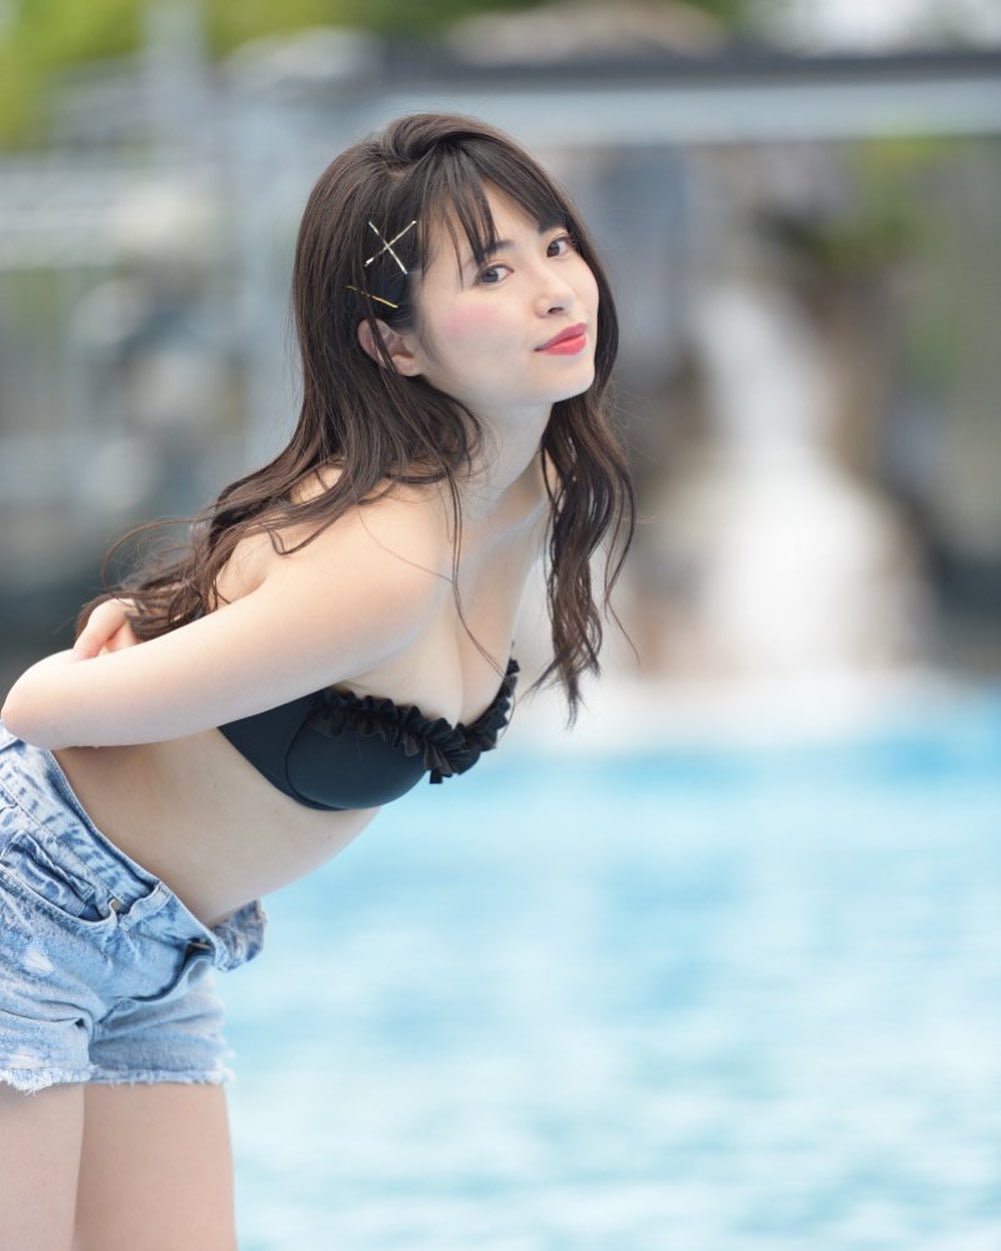 Nozomi Sato sexy Japanese gravure idol in cute black bikini top